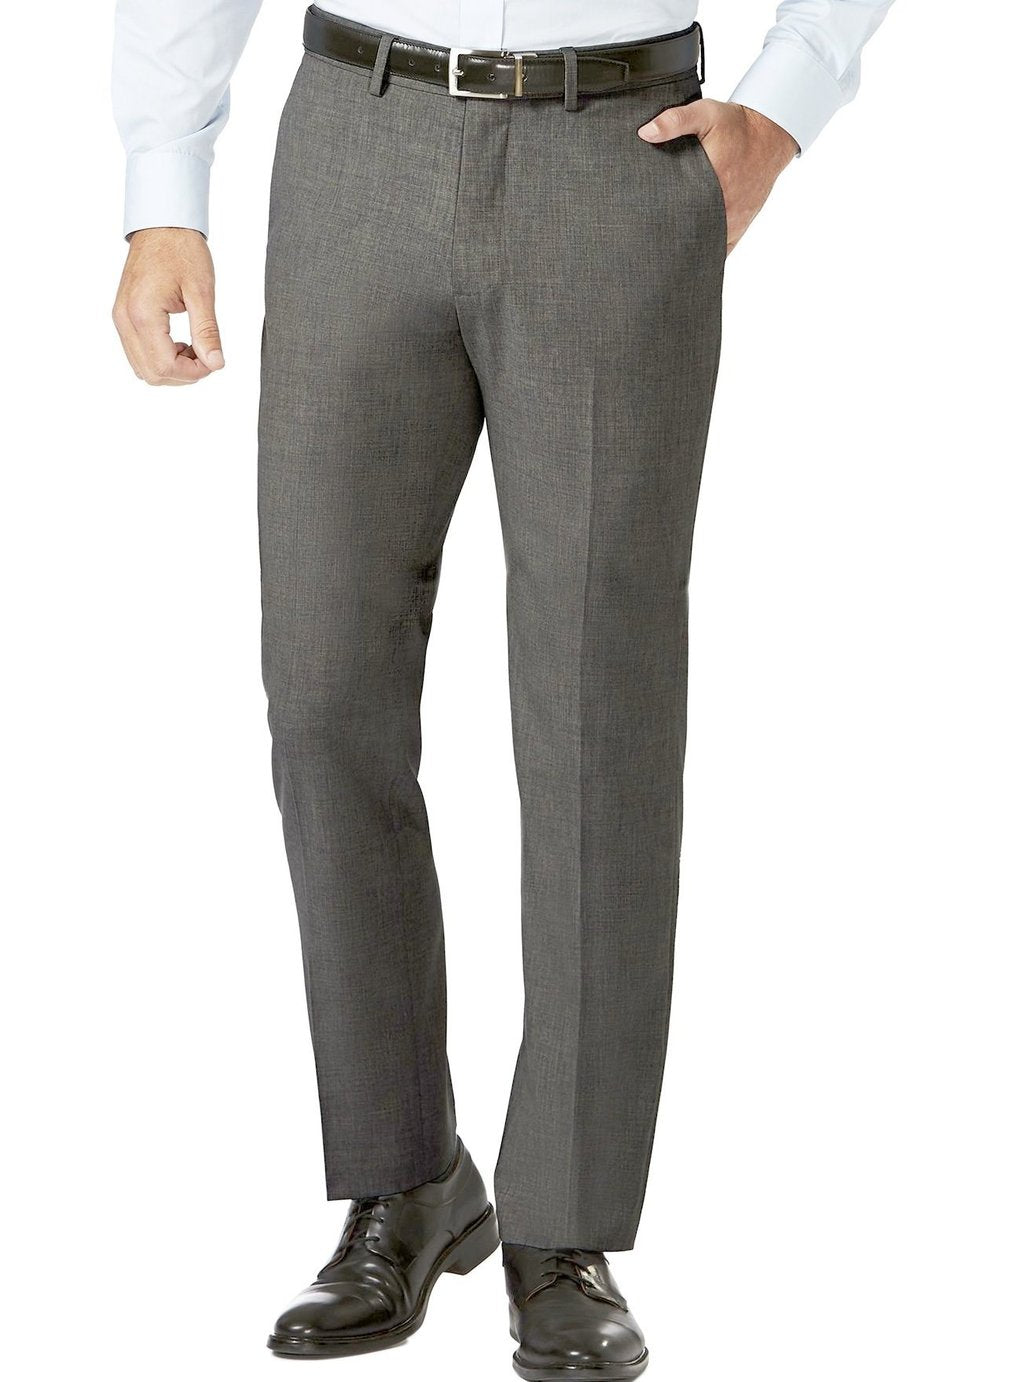 Vinci Slim Fit Flat Front Pre-Hemmed Dress Pants (Gray) OS-900